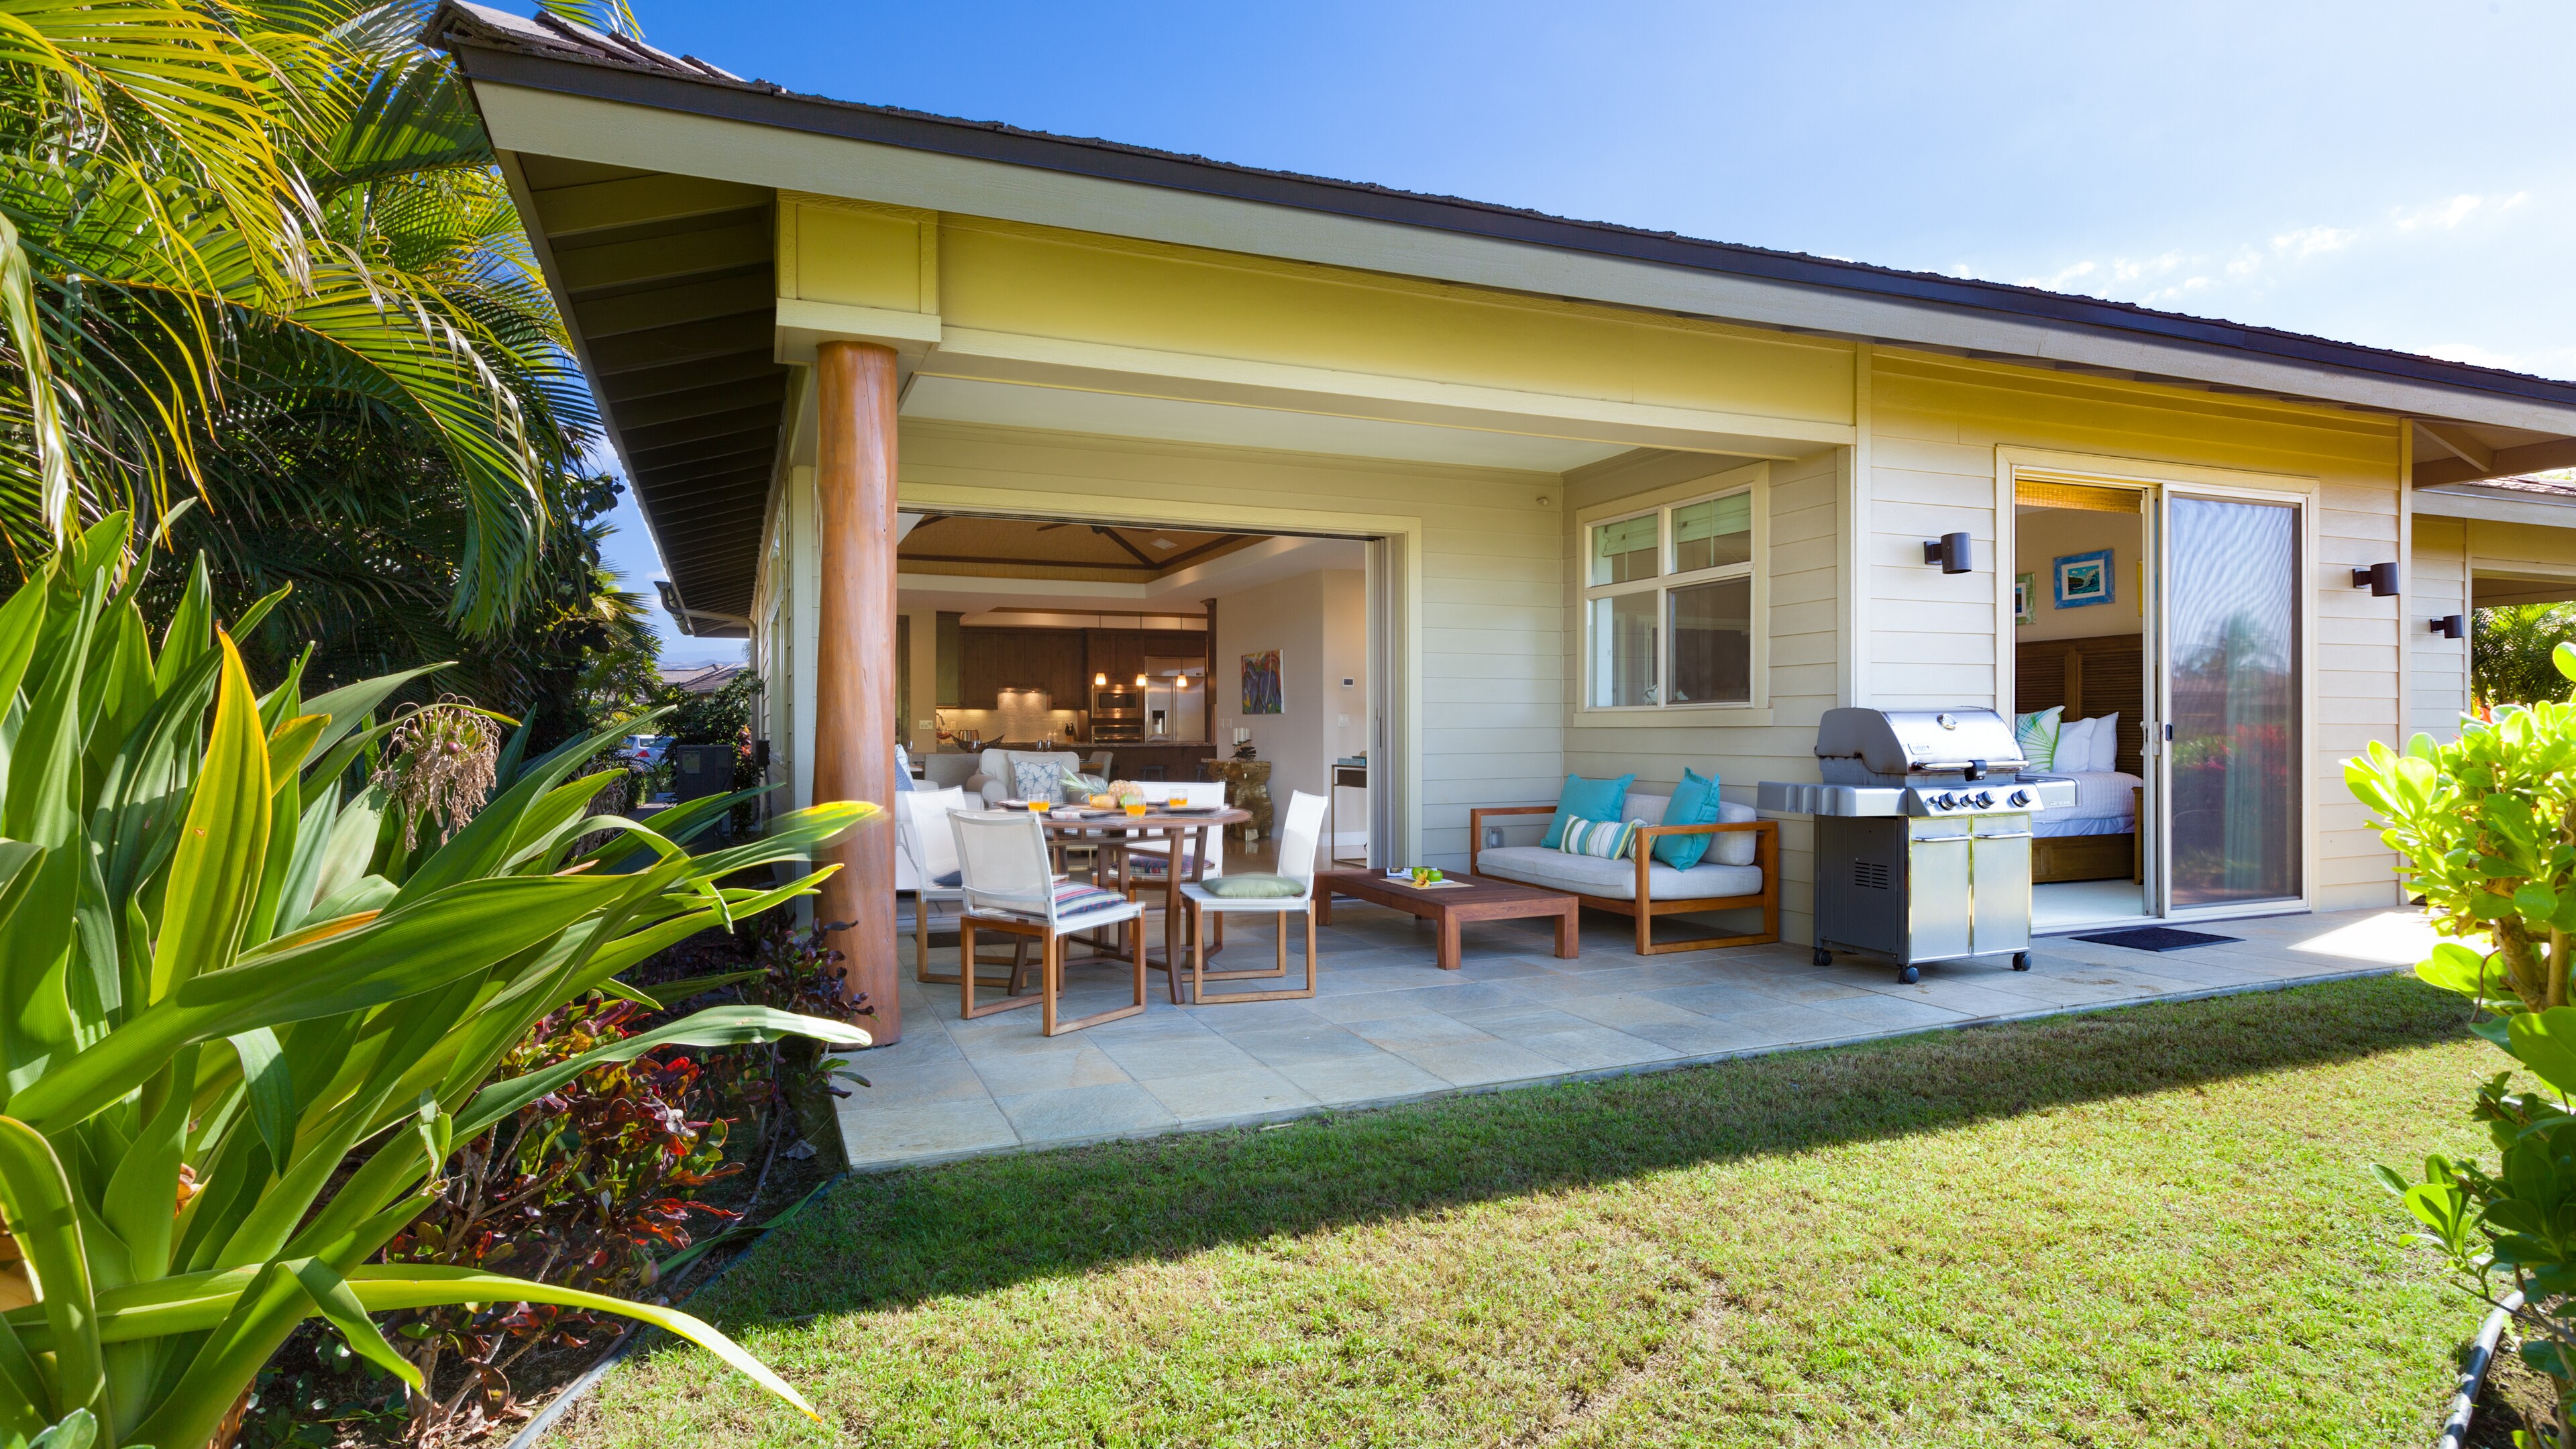 Welcome to Hawaiian Dream - Beautiful single level home in KaMilo community